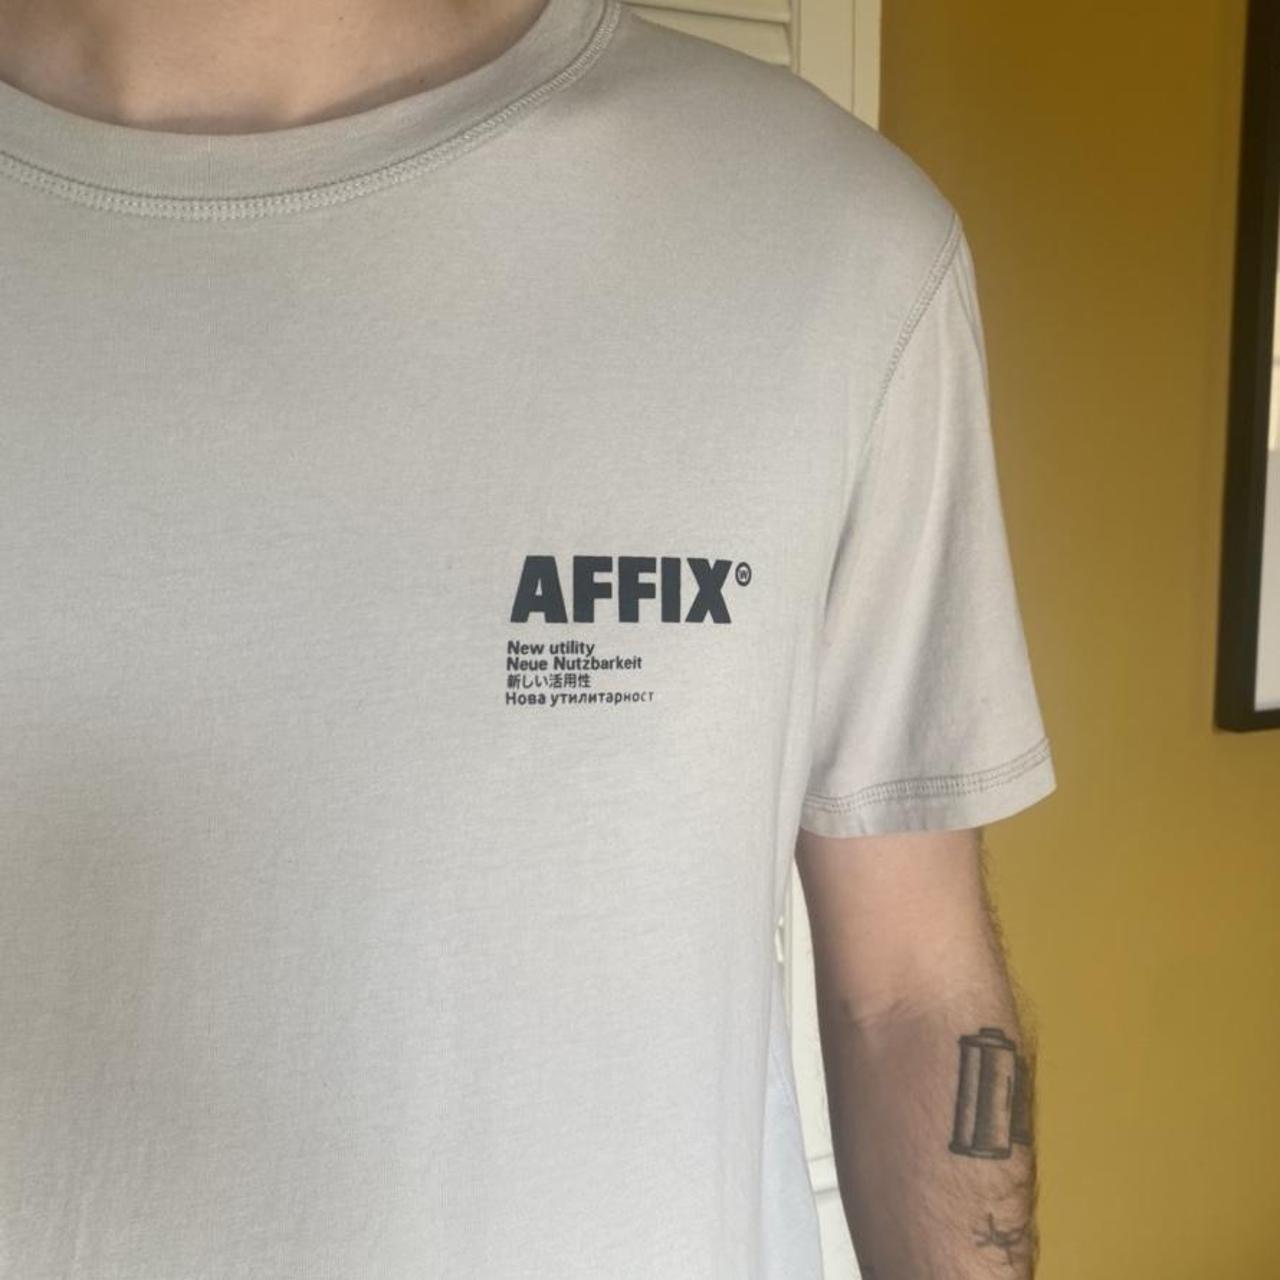 Affix Men's Grey and Black T-shirt